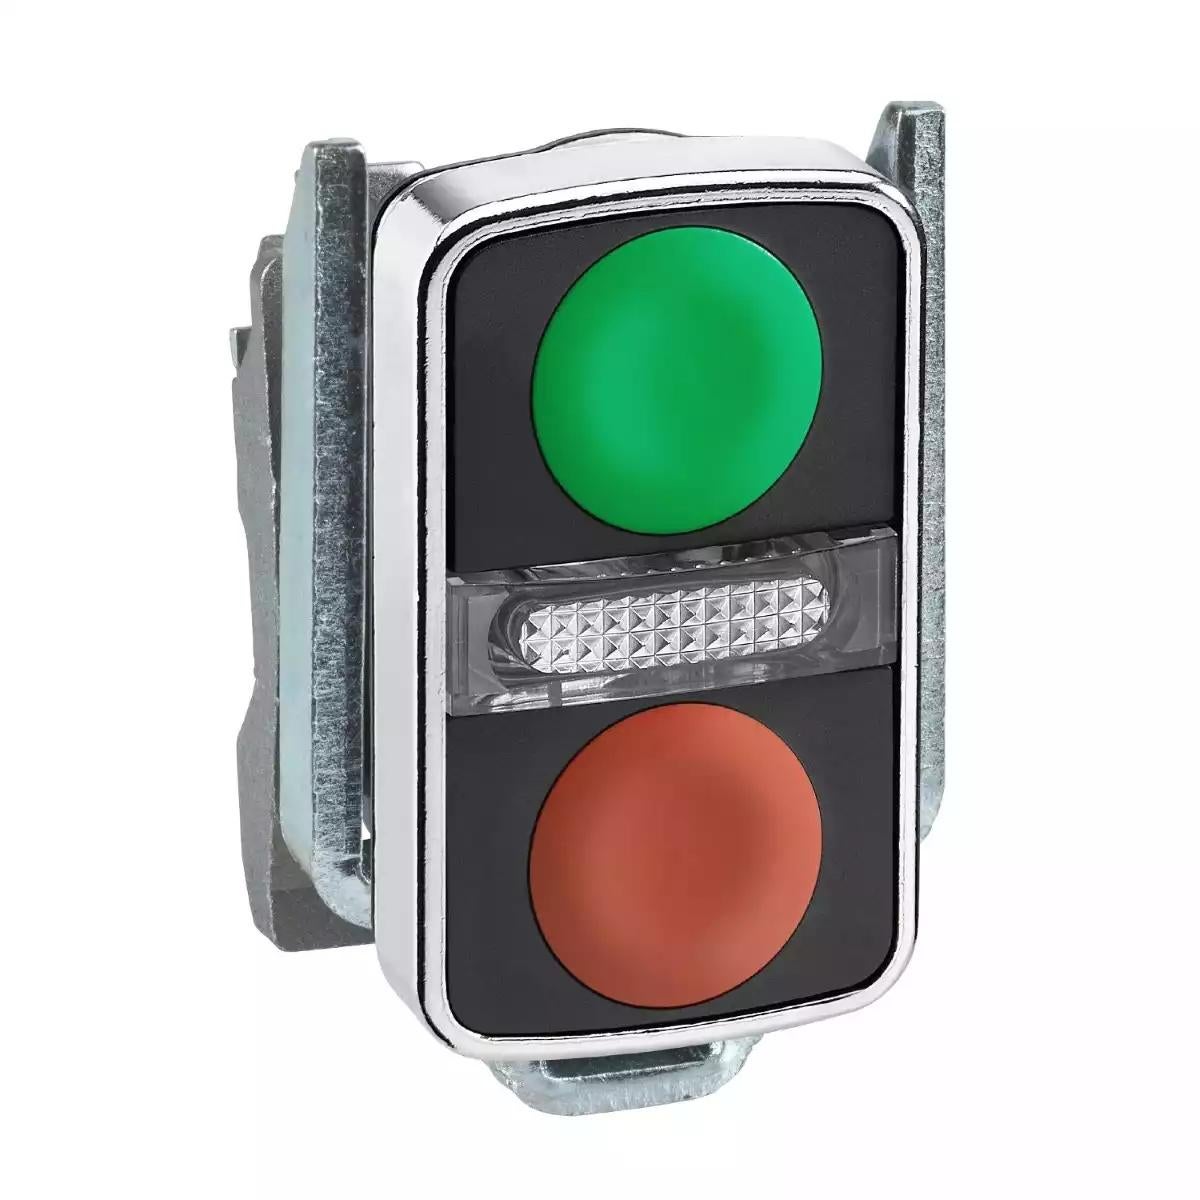 Illuminated double-headed push button head, Harmony XB4, metal, 22mm, 1 green fLush+1 pilot light+1 red flush, unmarked